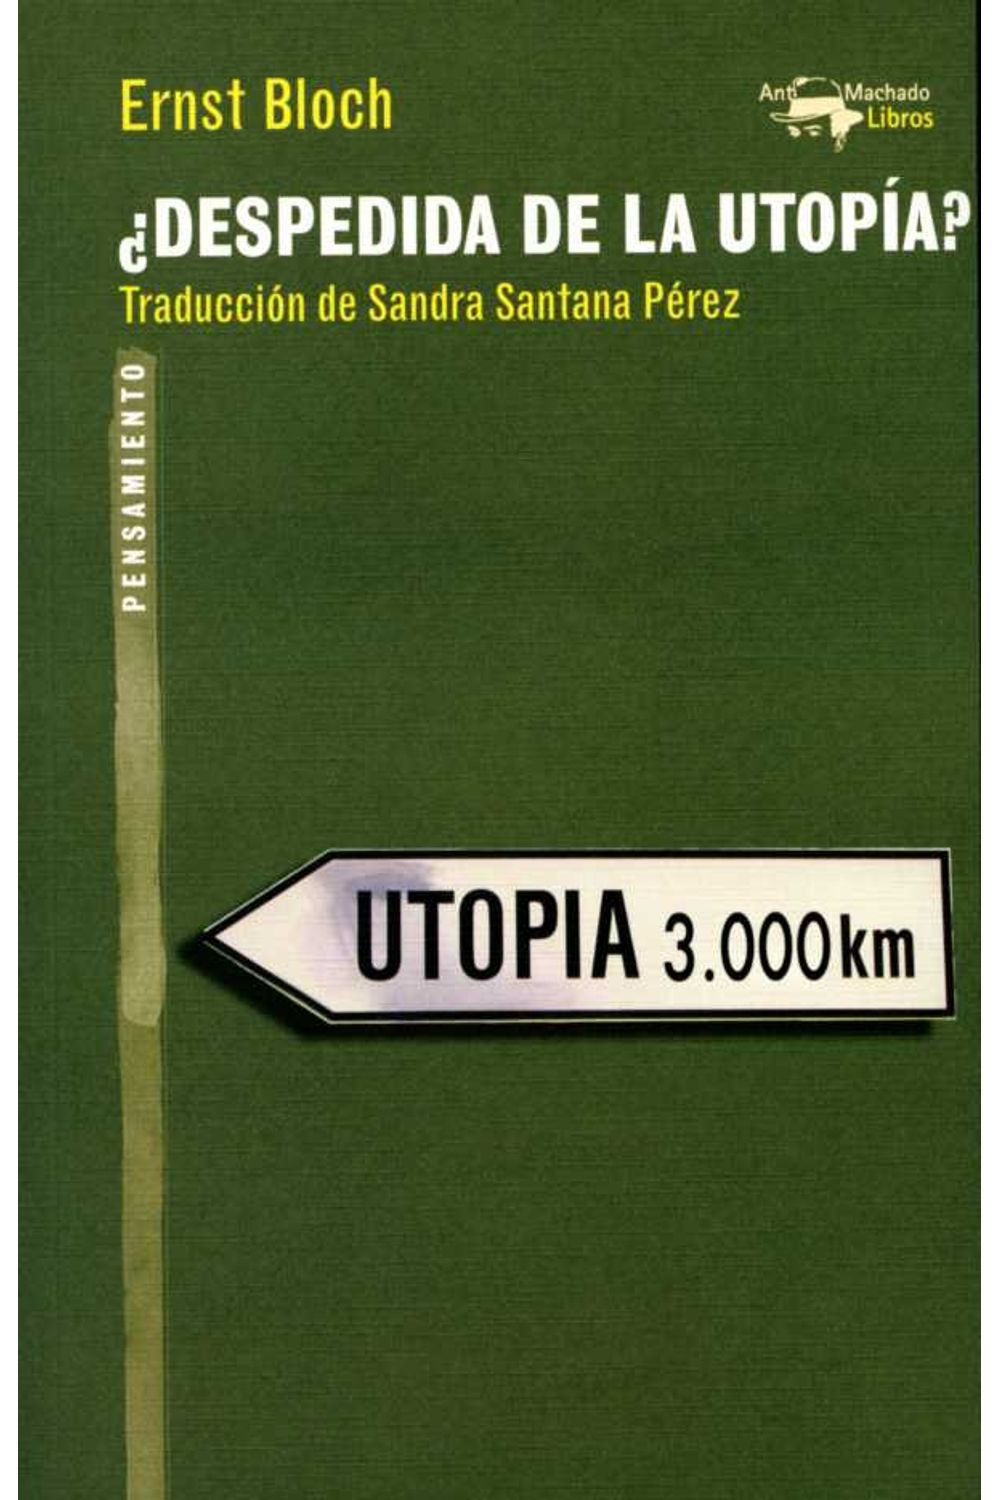 bw-iquestdespedida-de-la-utopiacutea-antonio-machado-libros-9788491141754